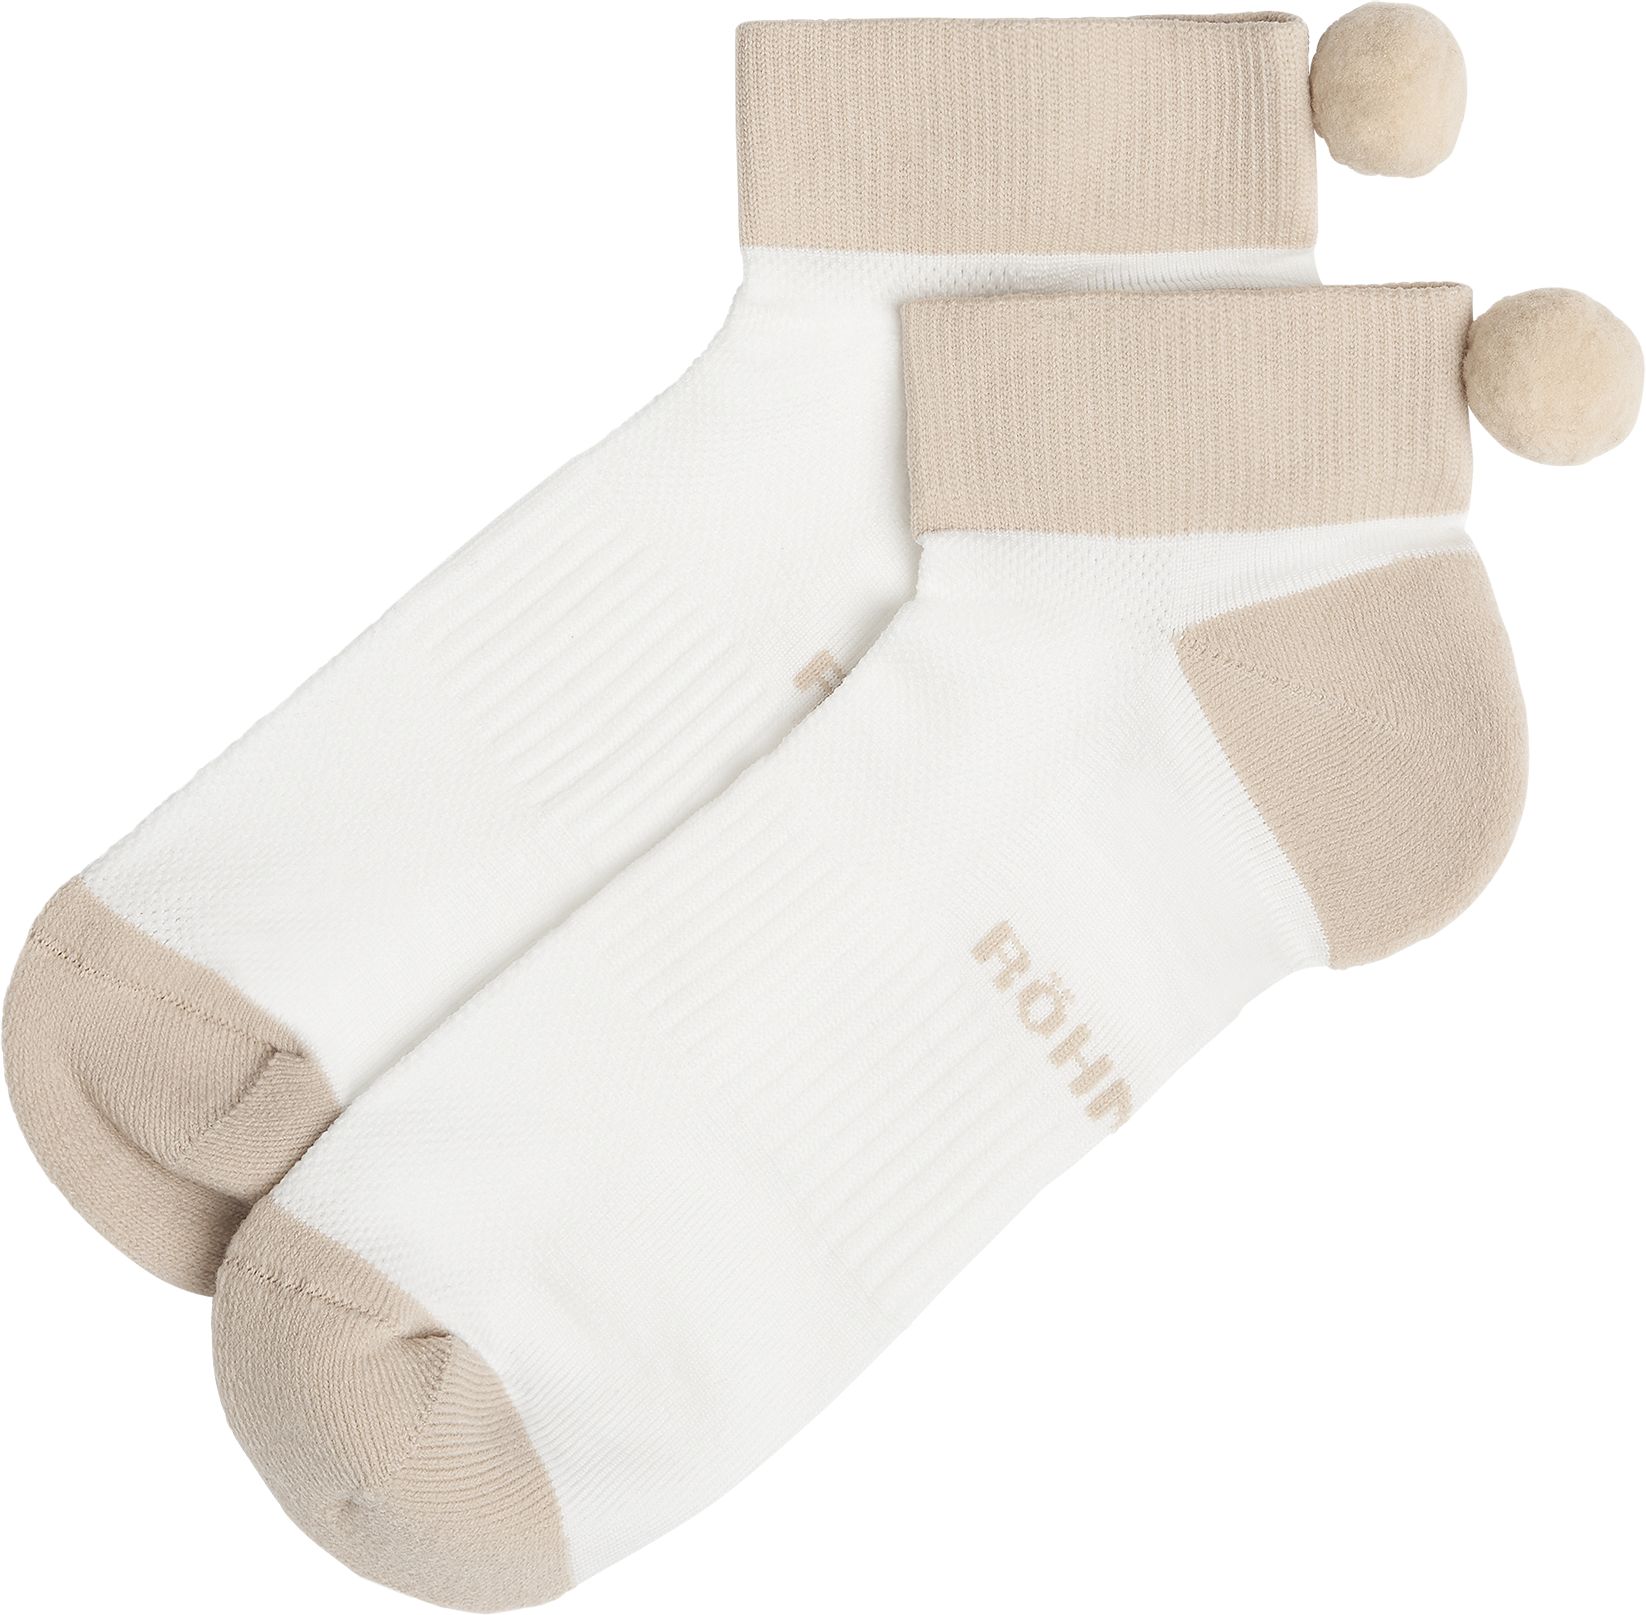 RÖHNISCH, 2-pack Functional Pompom Socks